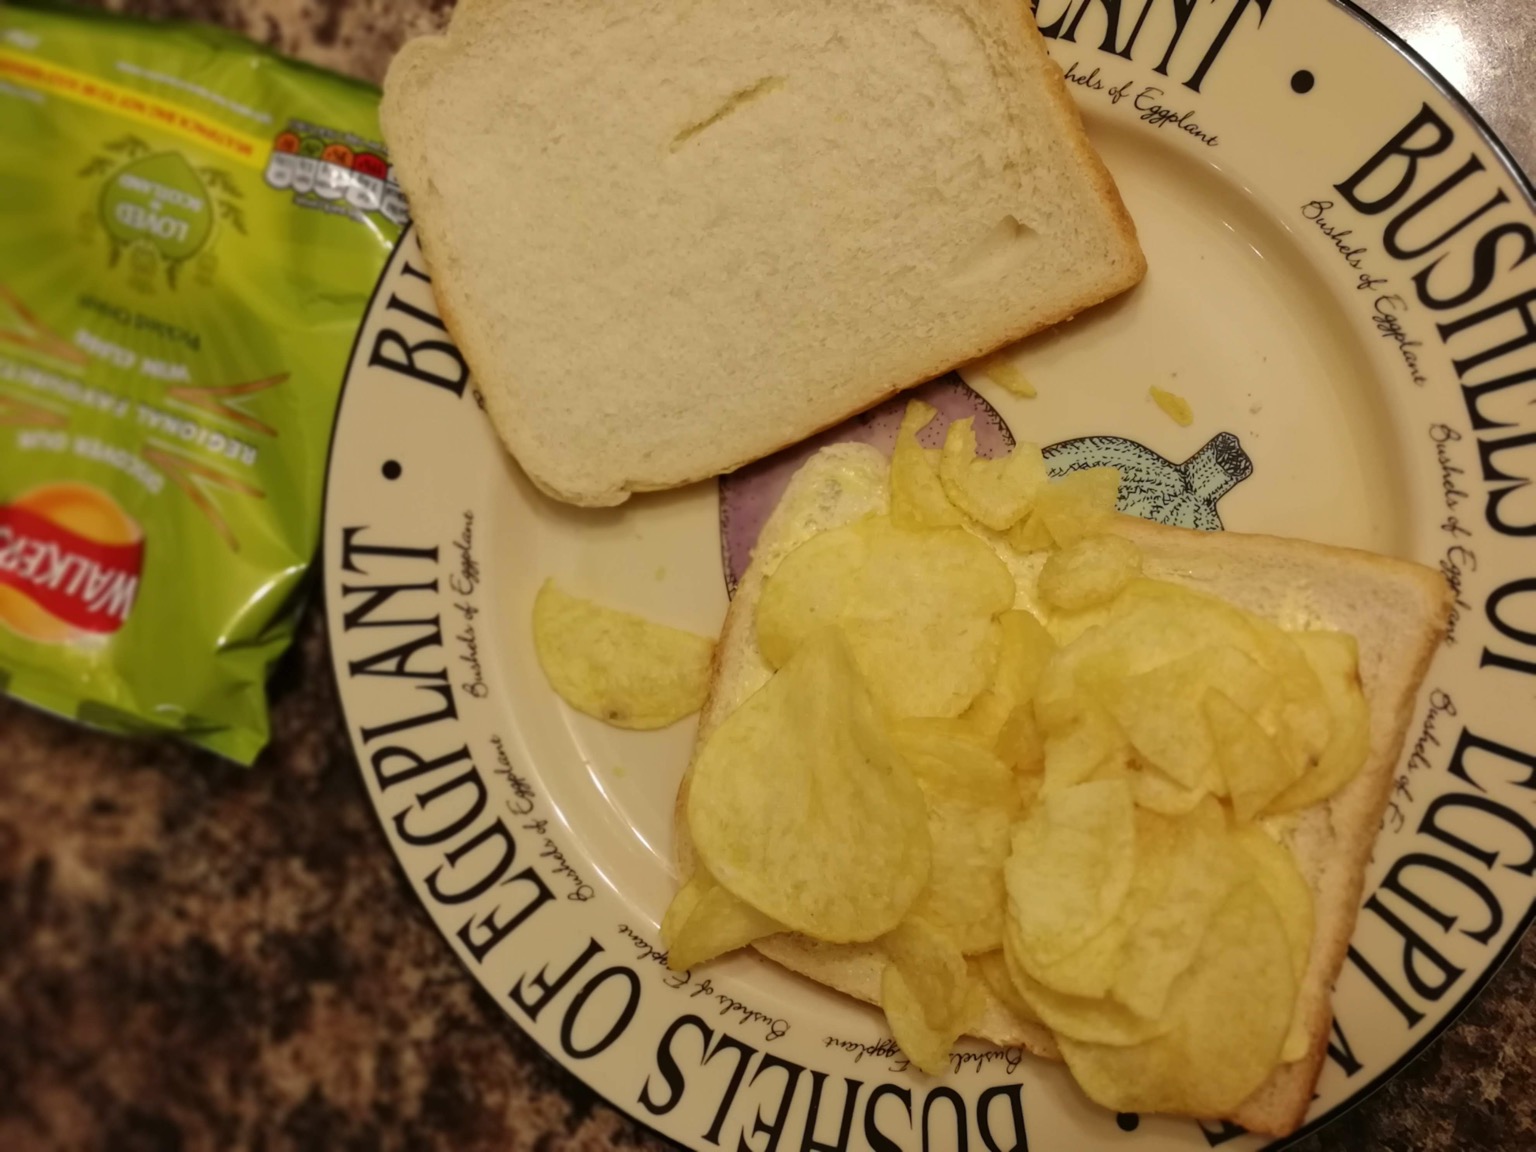 White crisp sandwich with lid off and bag alongside